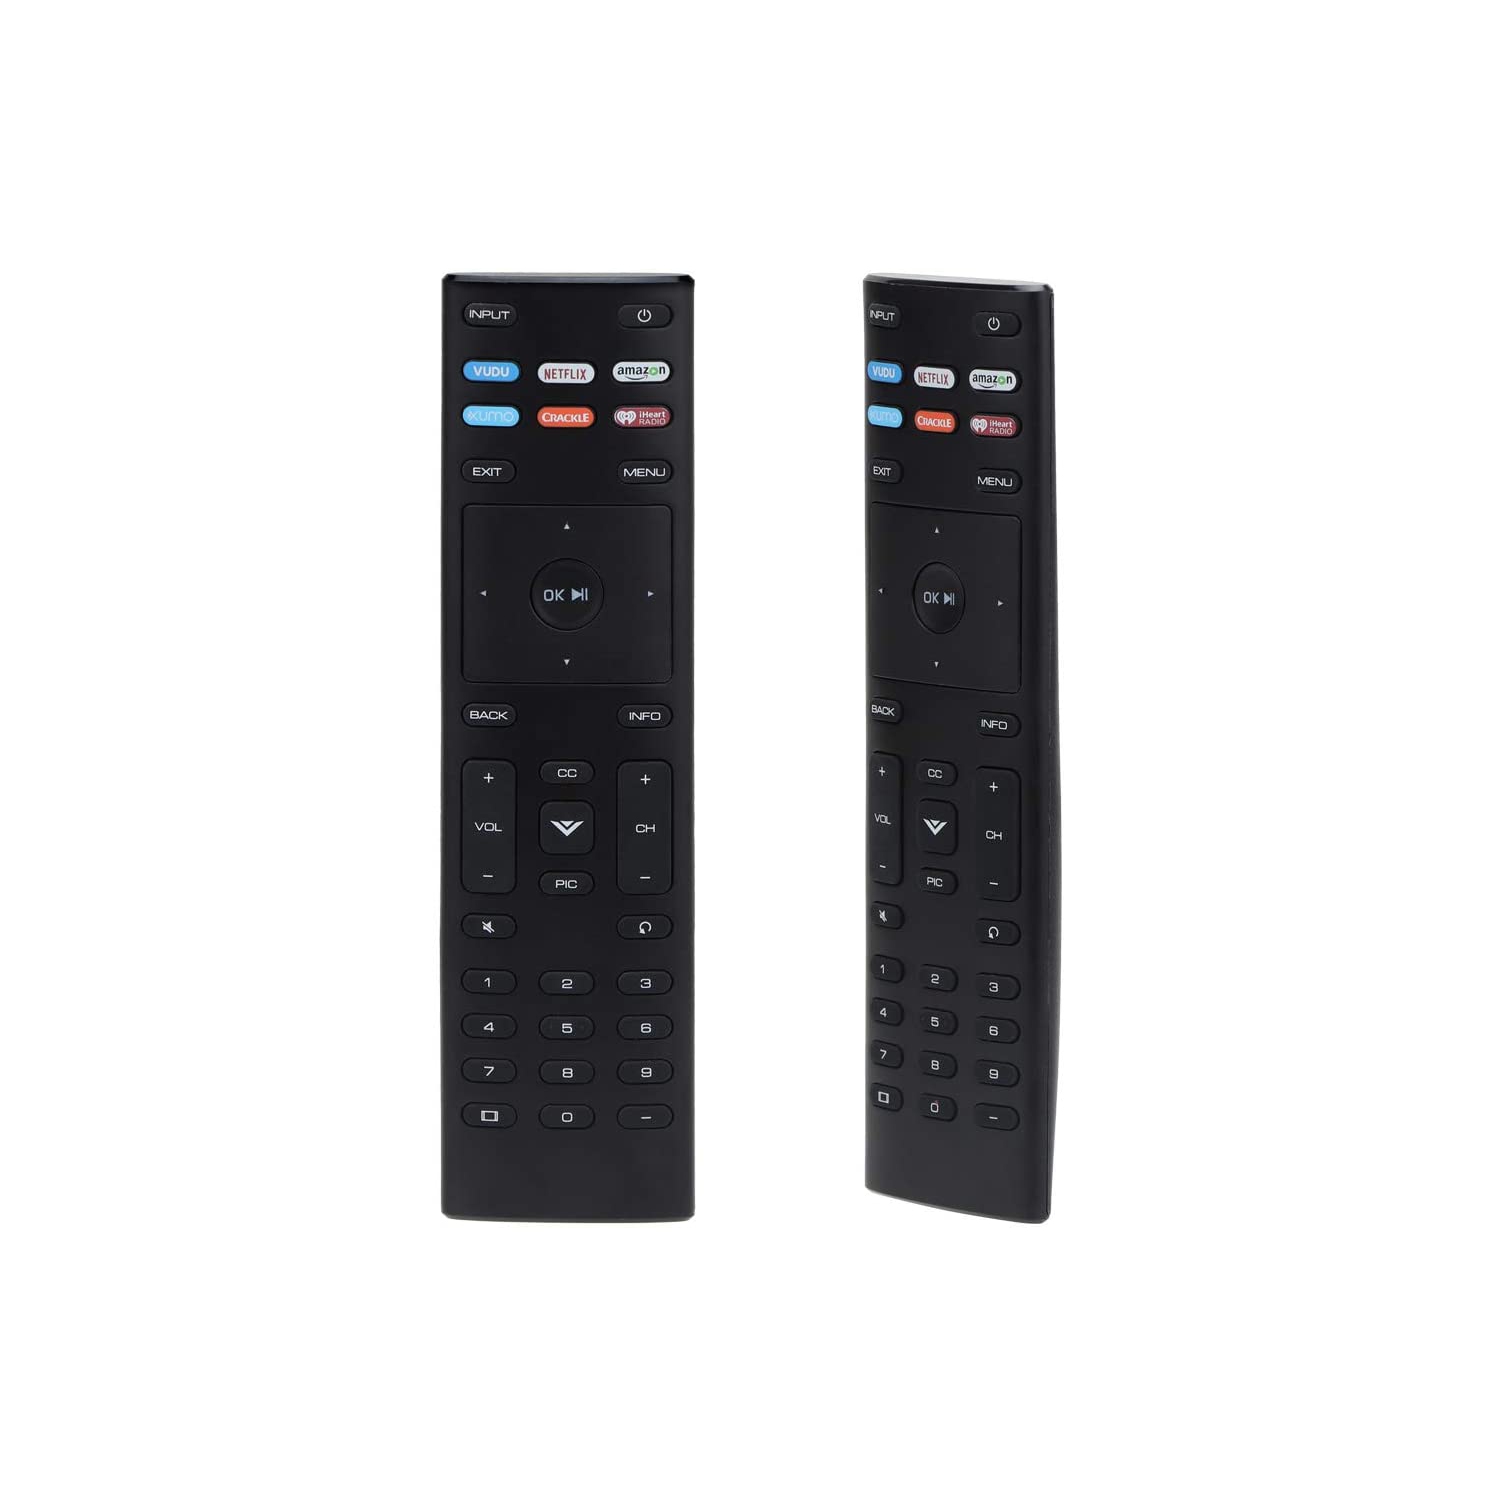 XRT136 Remote Control Replacement fit for Vizio Smart TV D24f-F1 D32f-F1 D43f-F1 D50f-F1 E43-E2 E60-E3 E75-E1